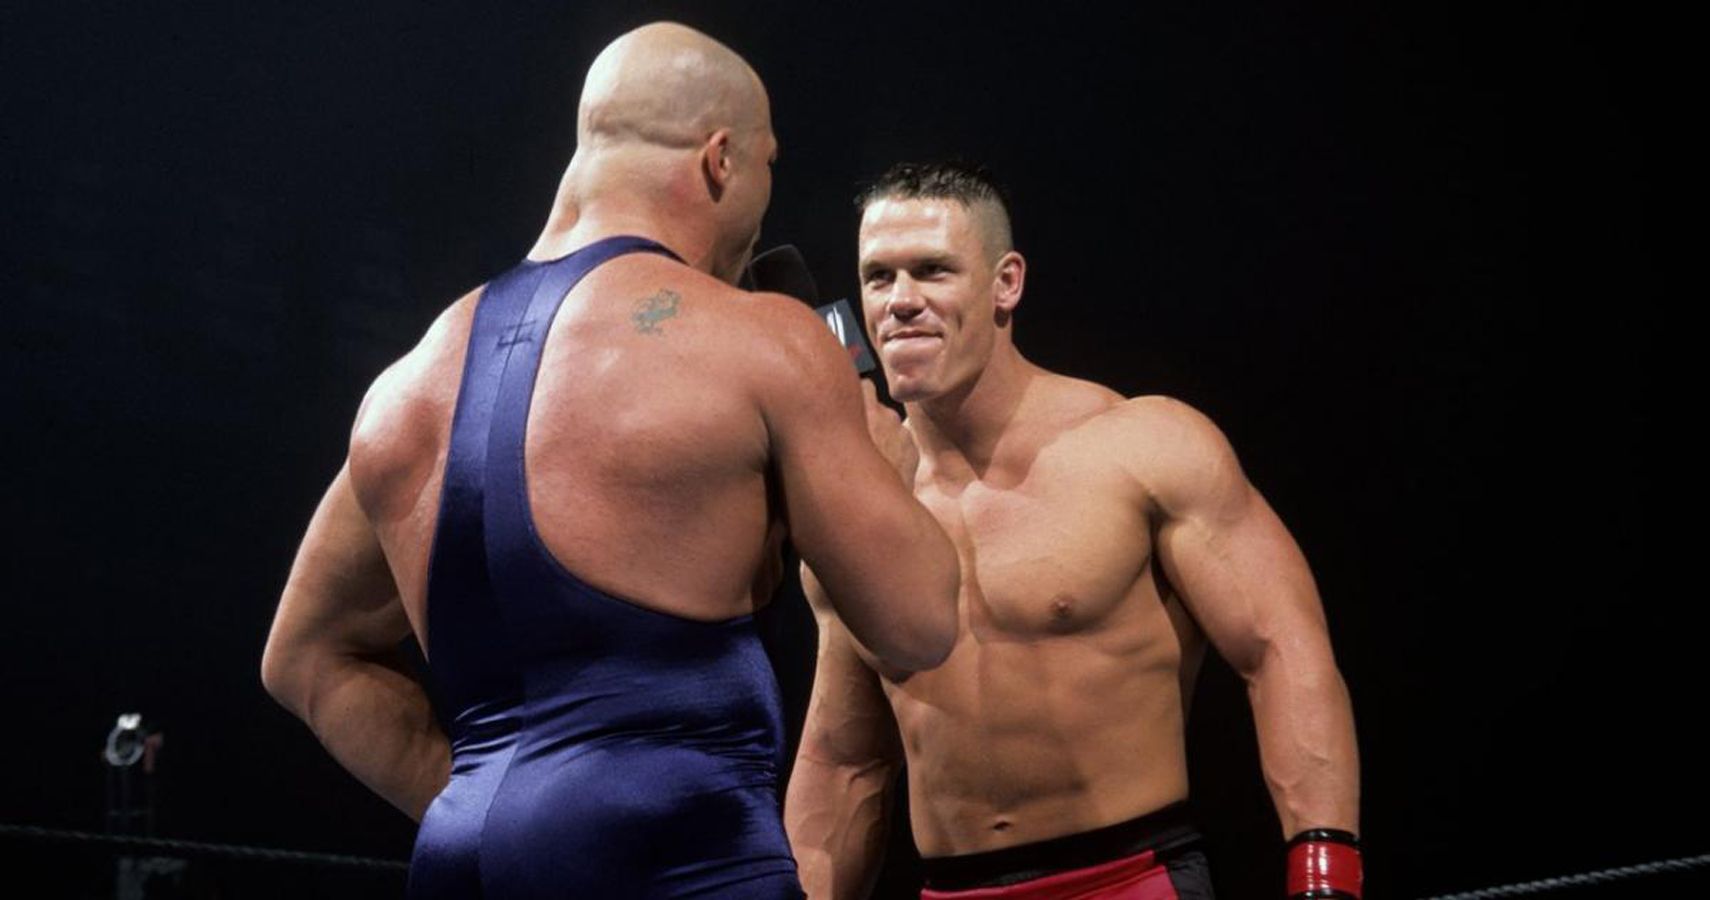 John Cena debuts in WWE